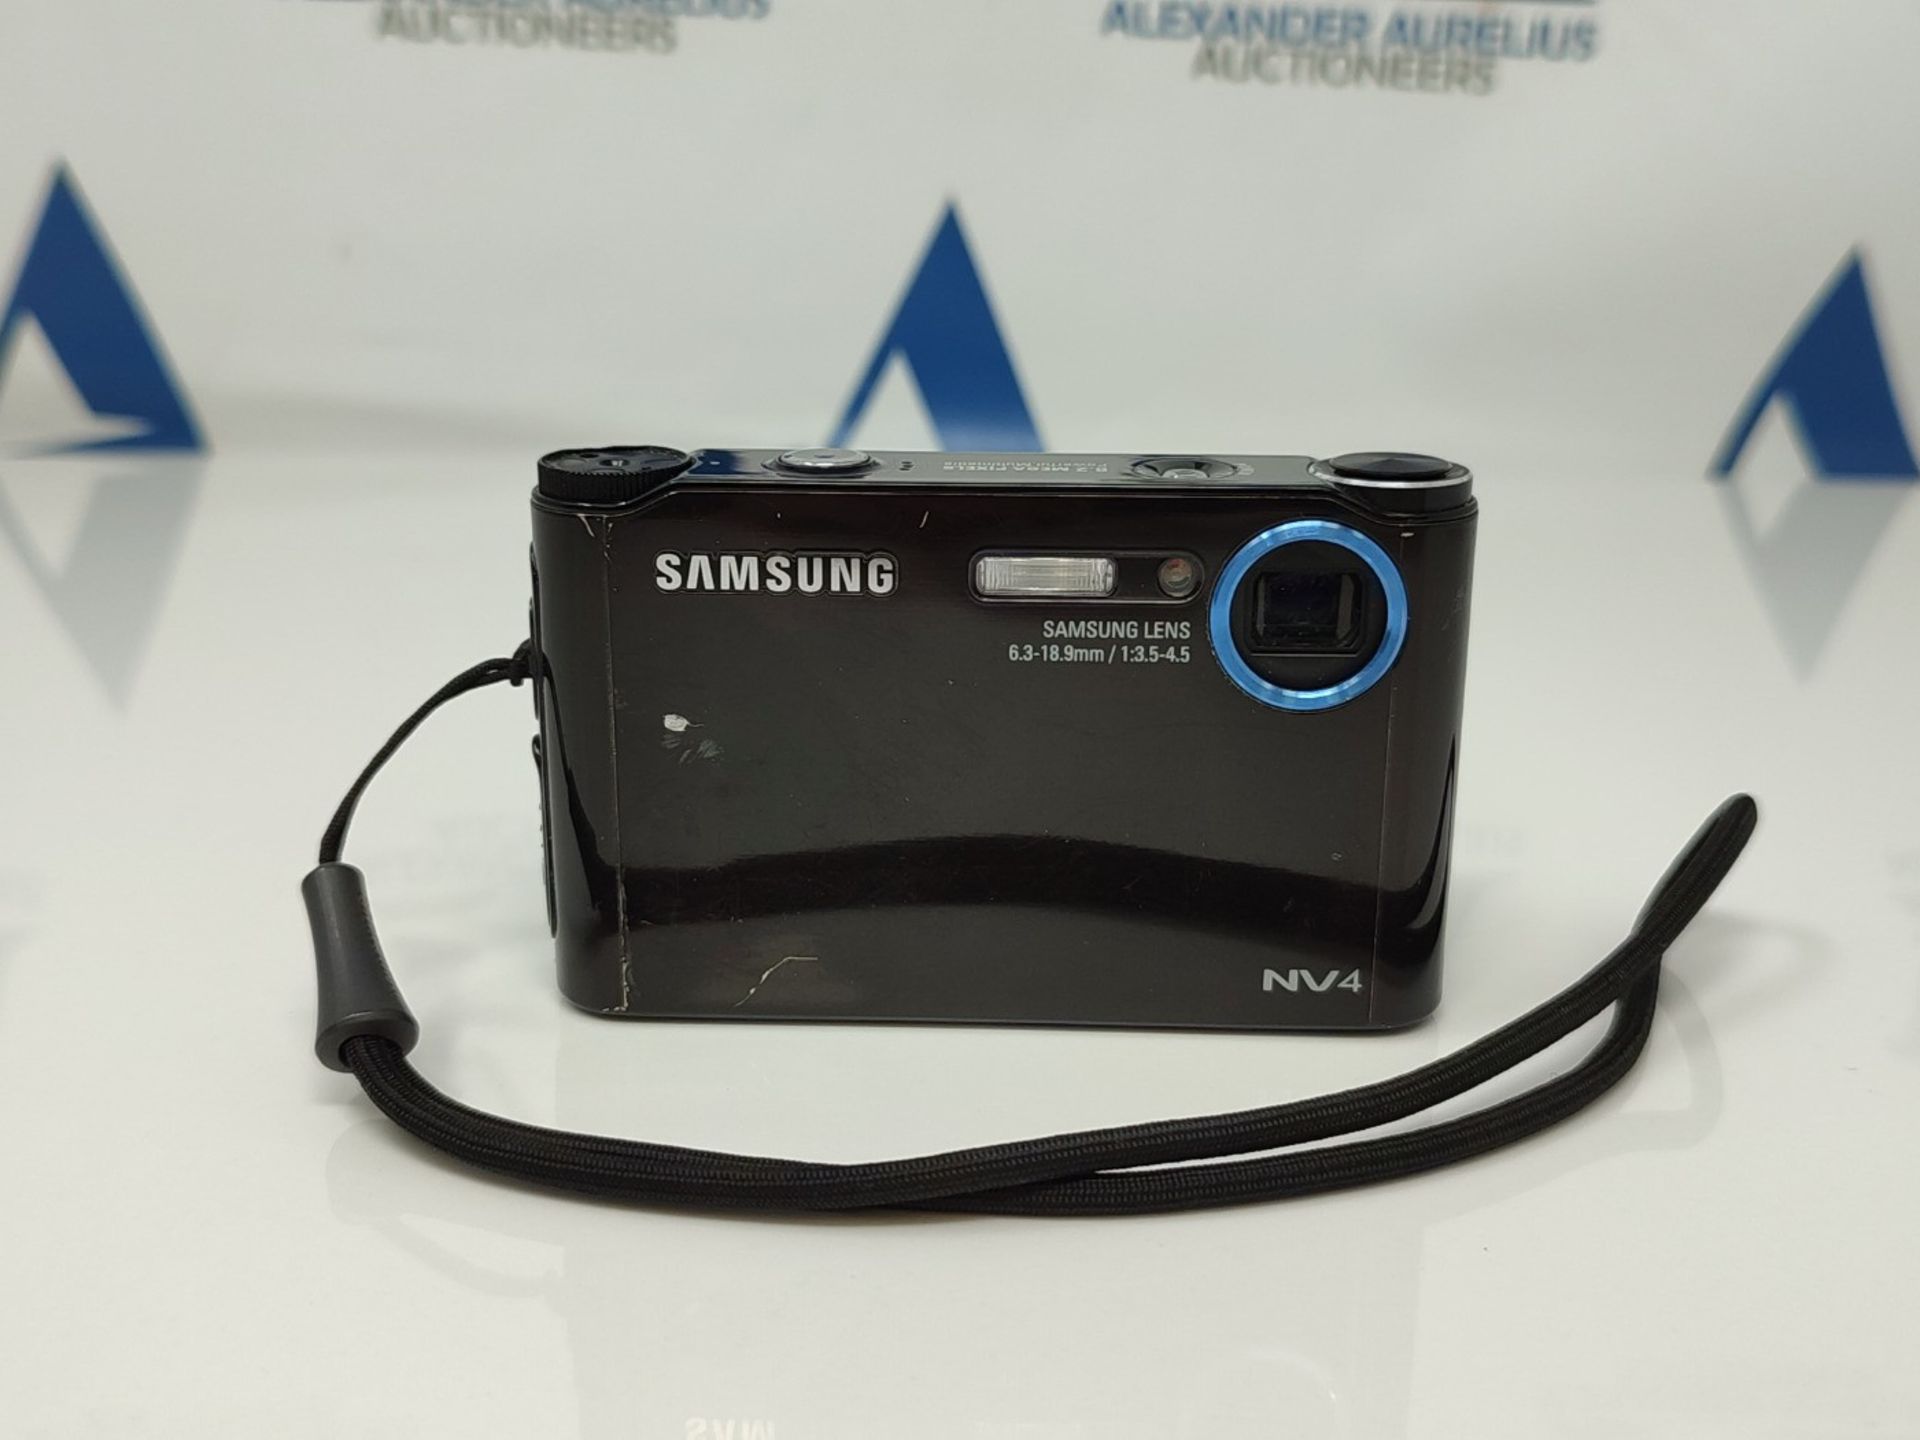 Samsung NV4 8.2MP Digital Camera, Black - Image 2 of 2